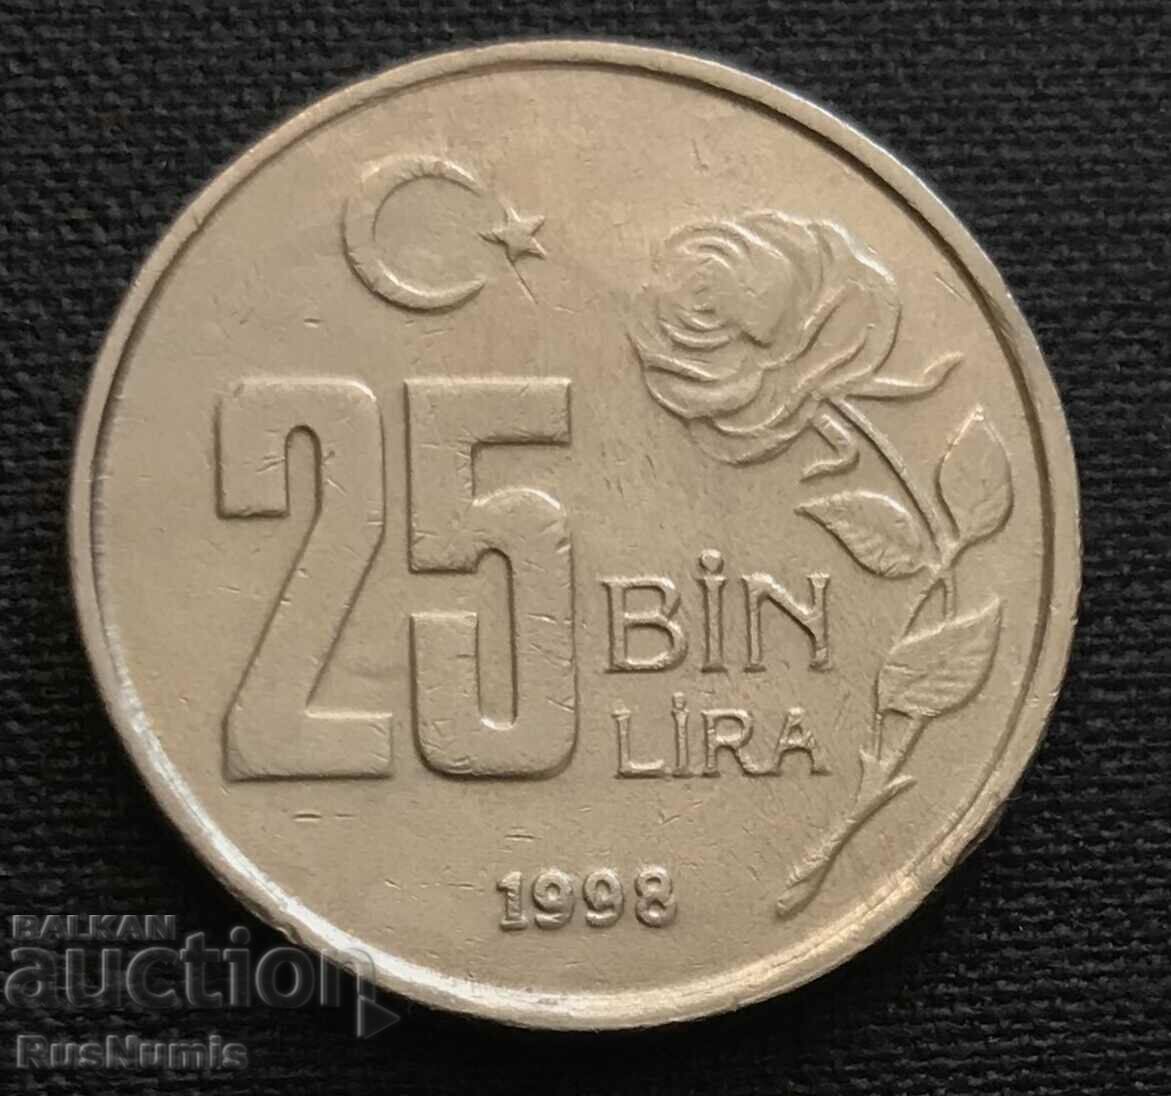 Curcan. 25.000 de lire sterline 1998